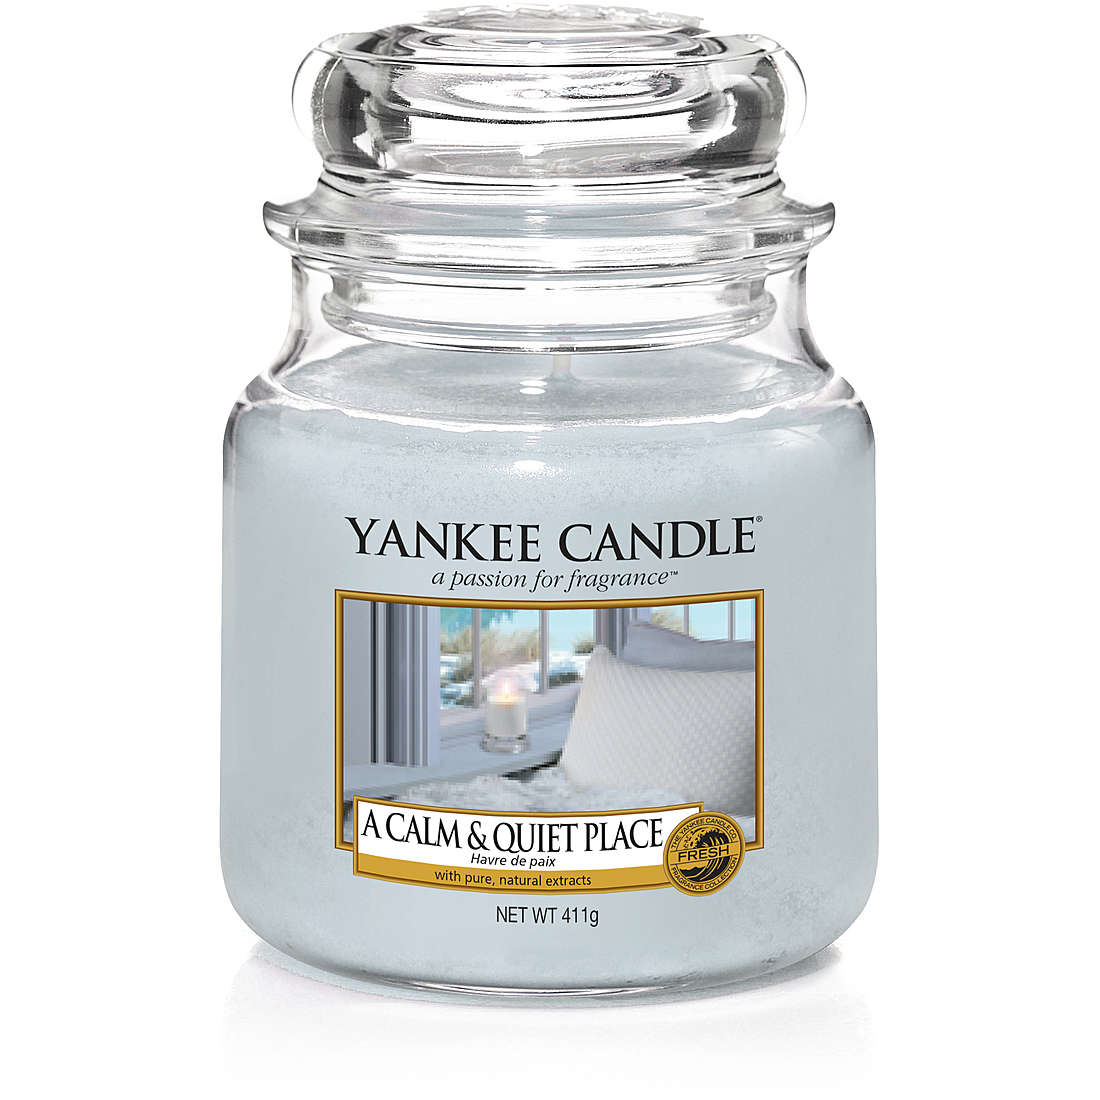 Candela Yankee Candle Giara, Media colore Grigio/Argento 1577129E